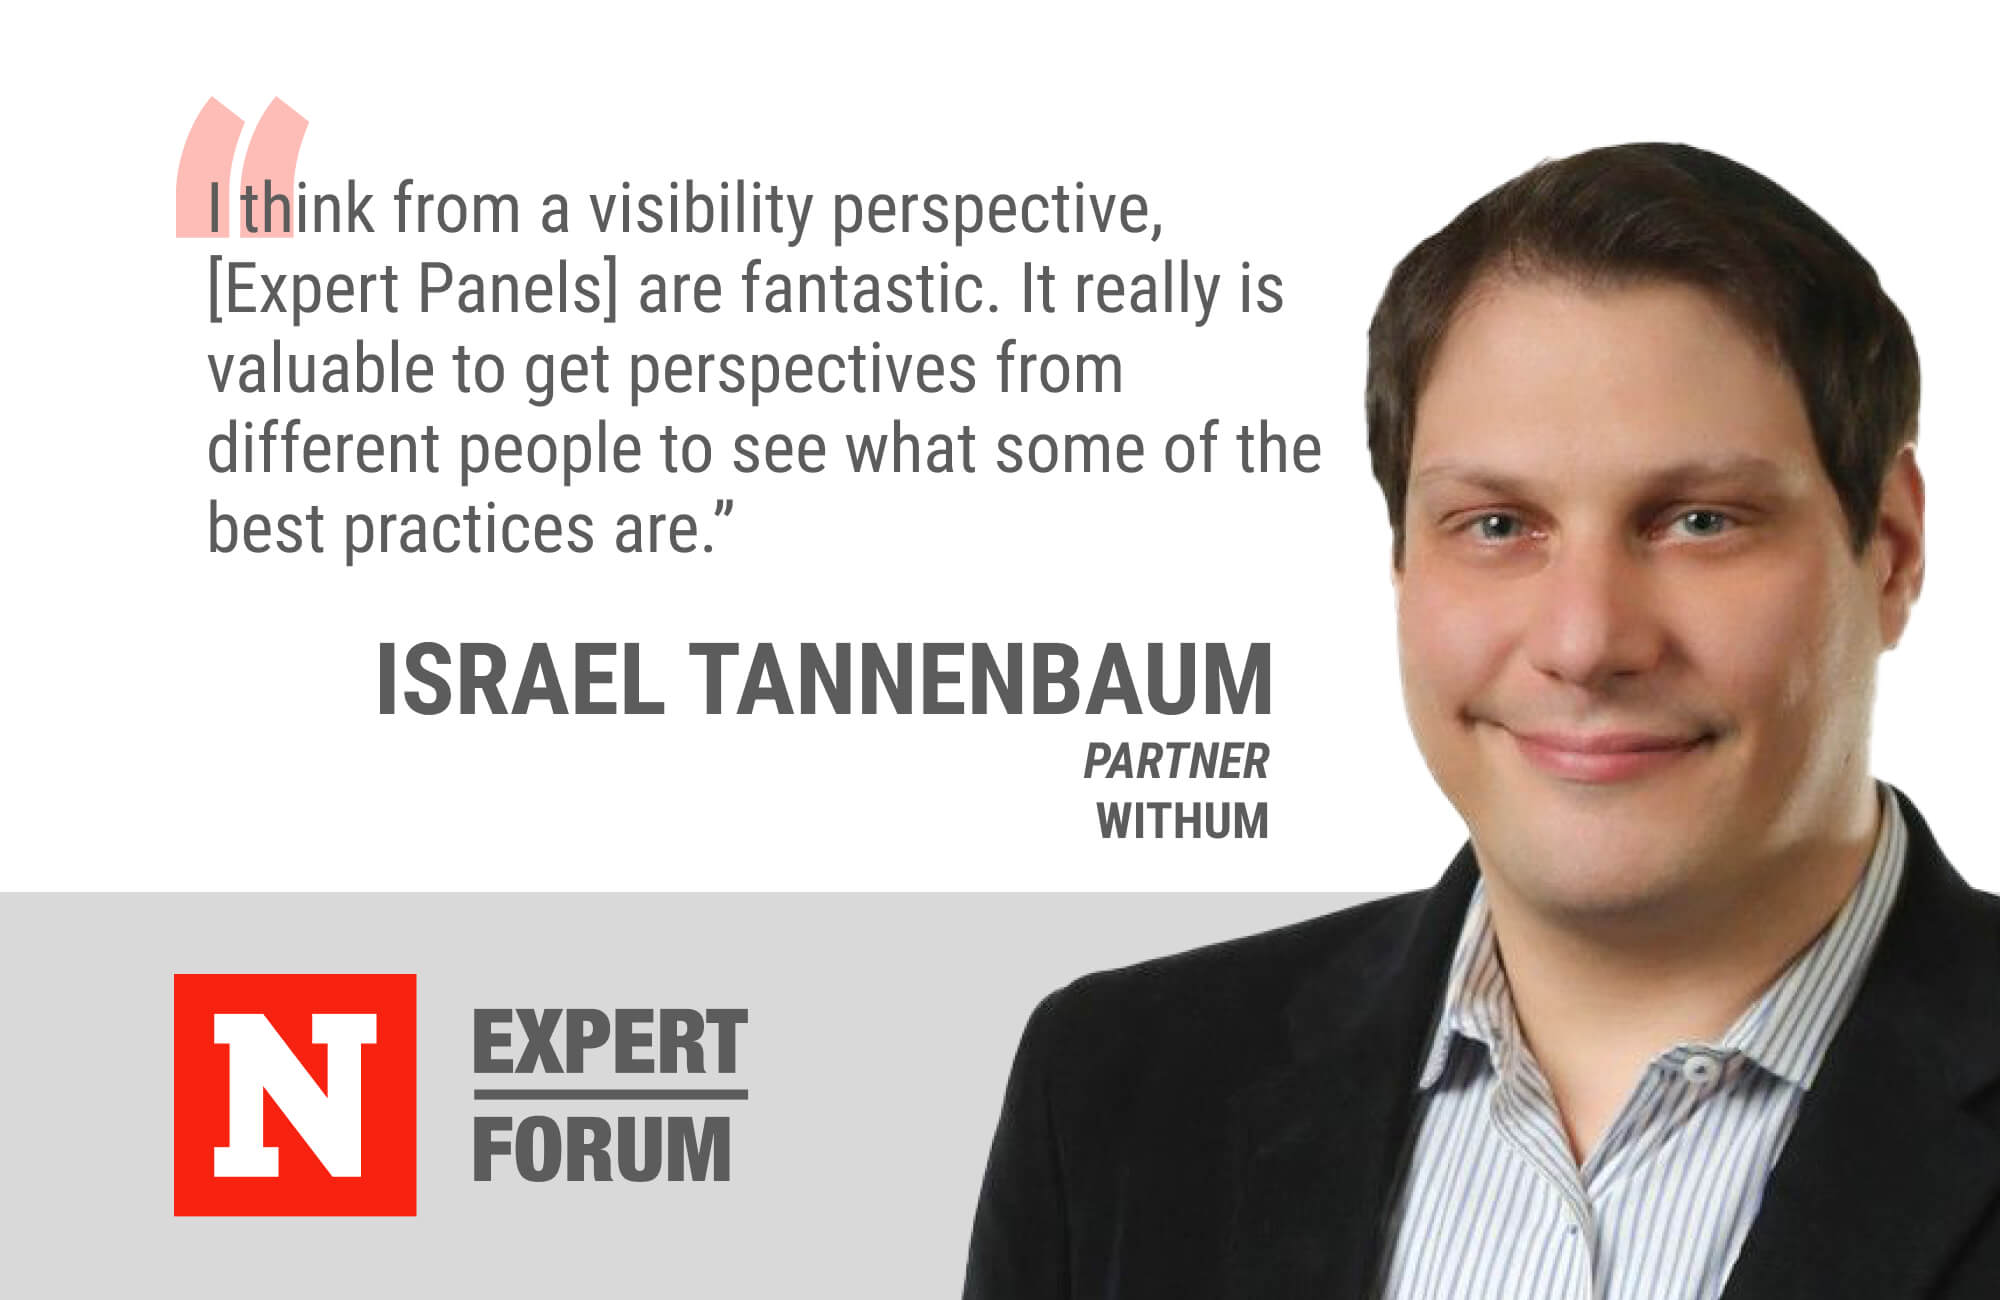 Newsweek Expert Forum member Israel Tannenbaum